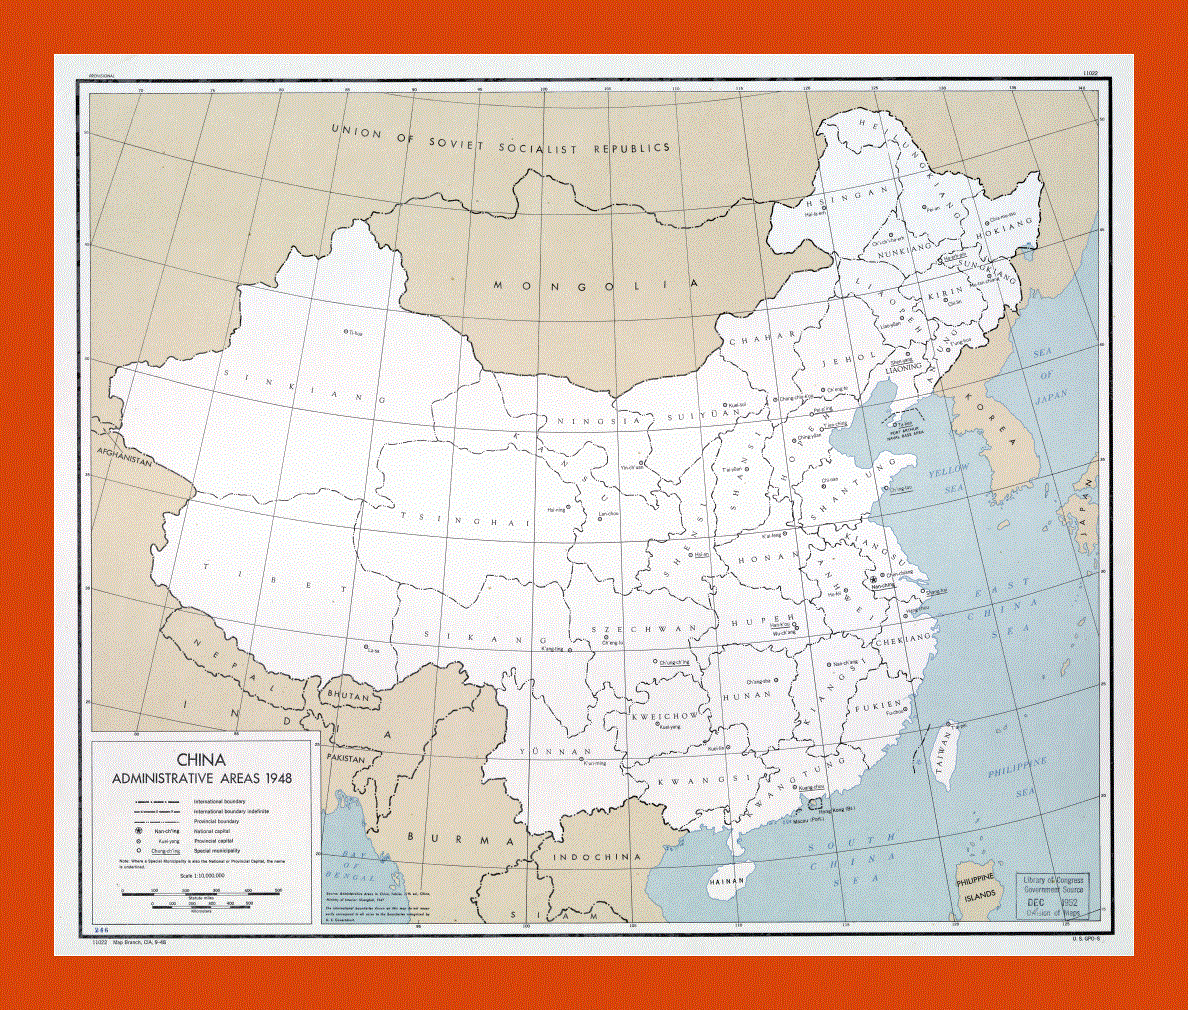 China administrative areas map - 1948